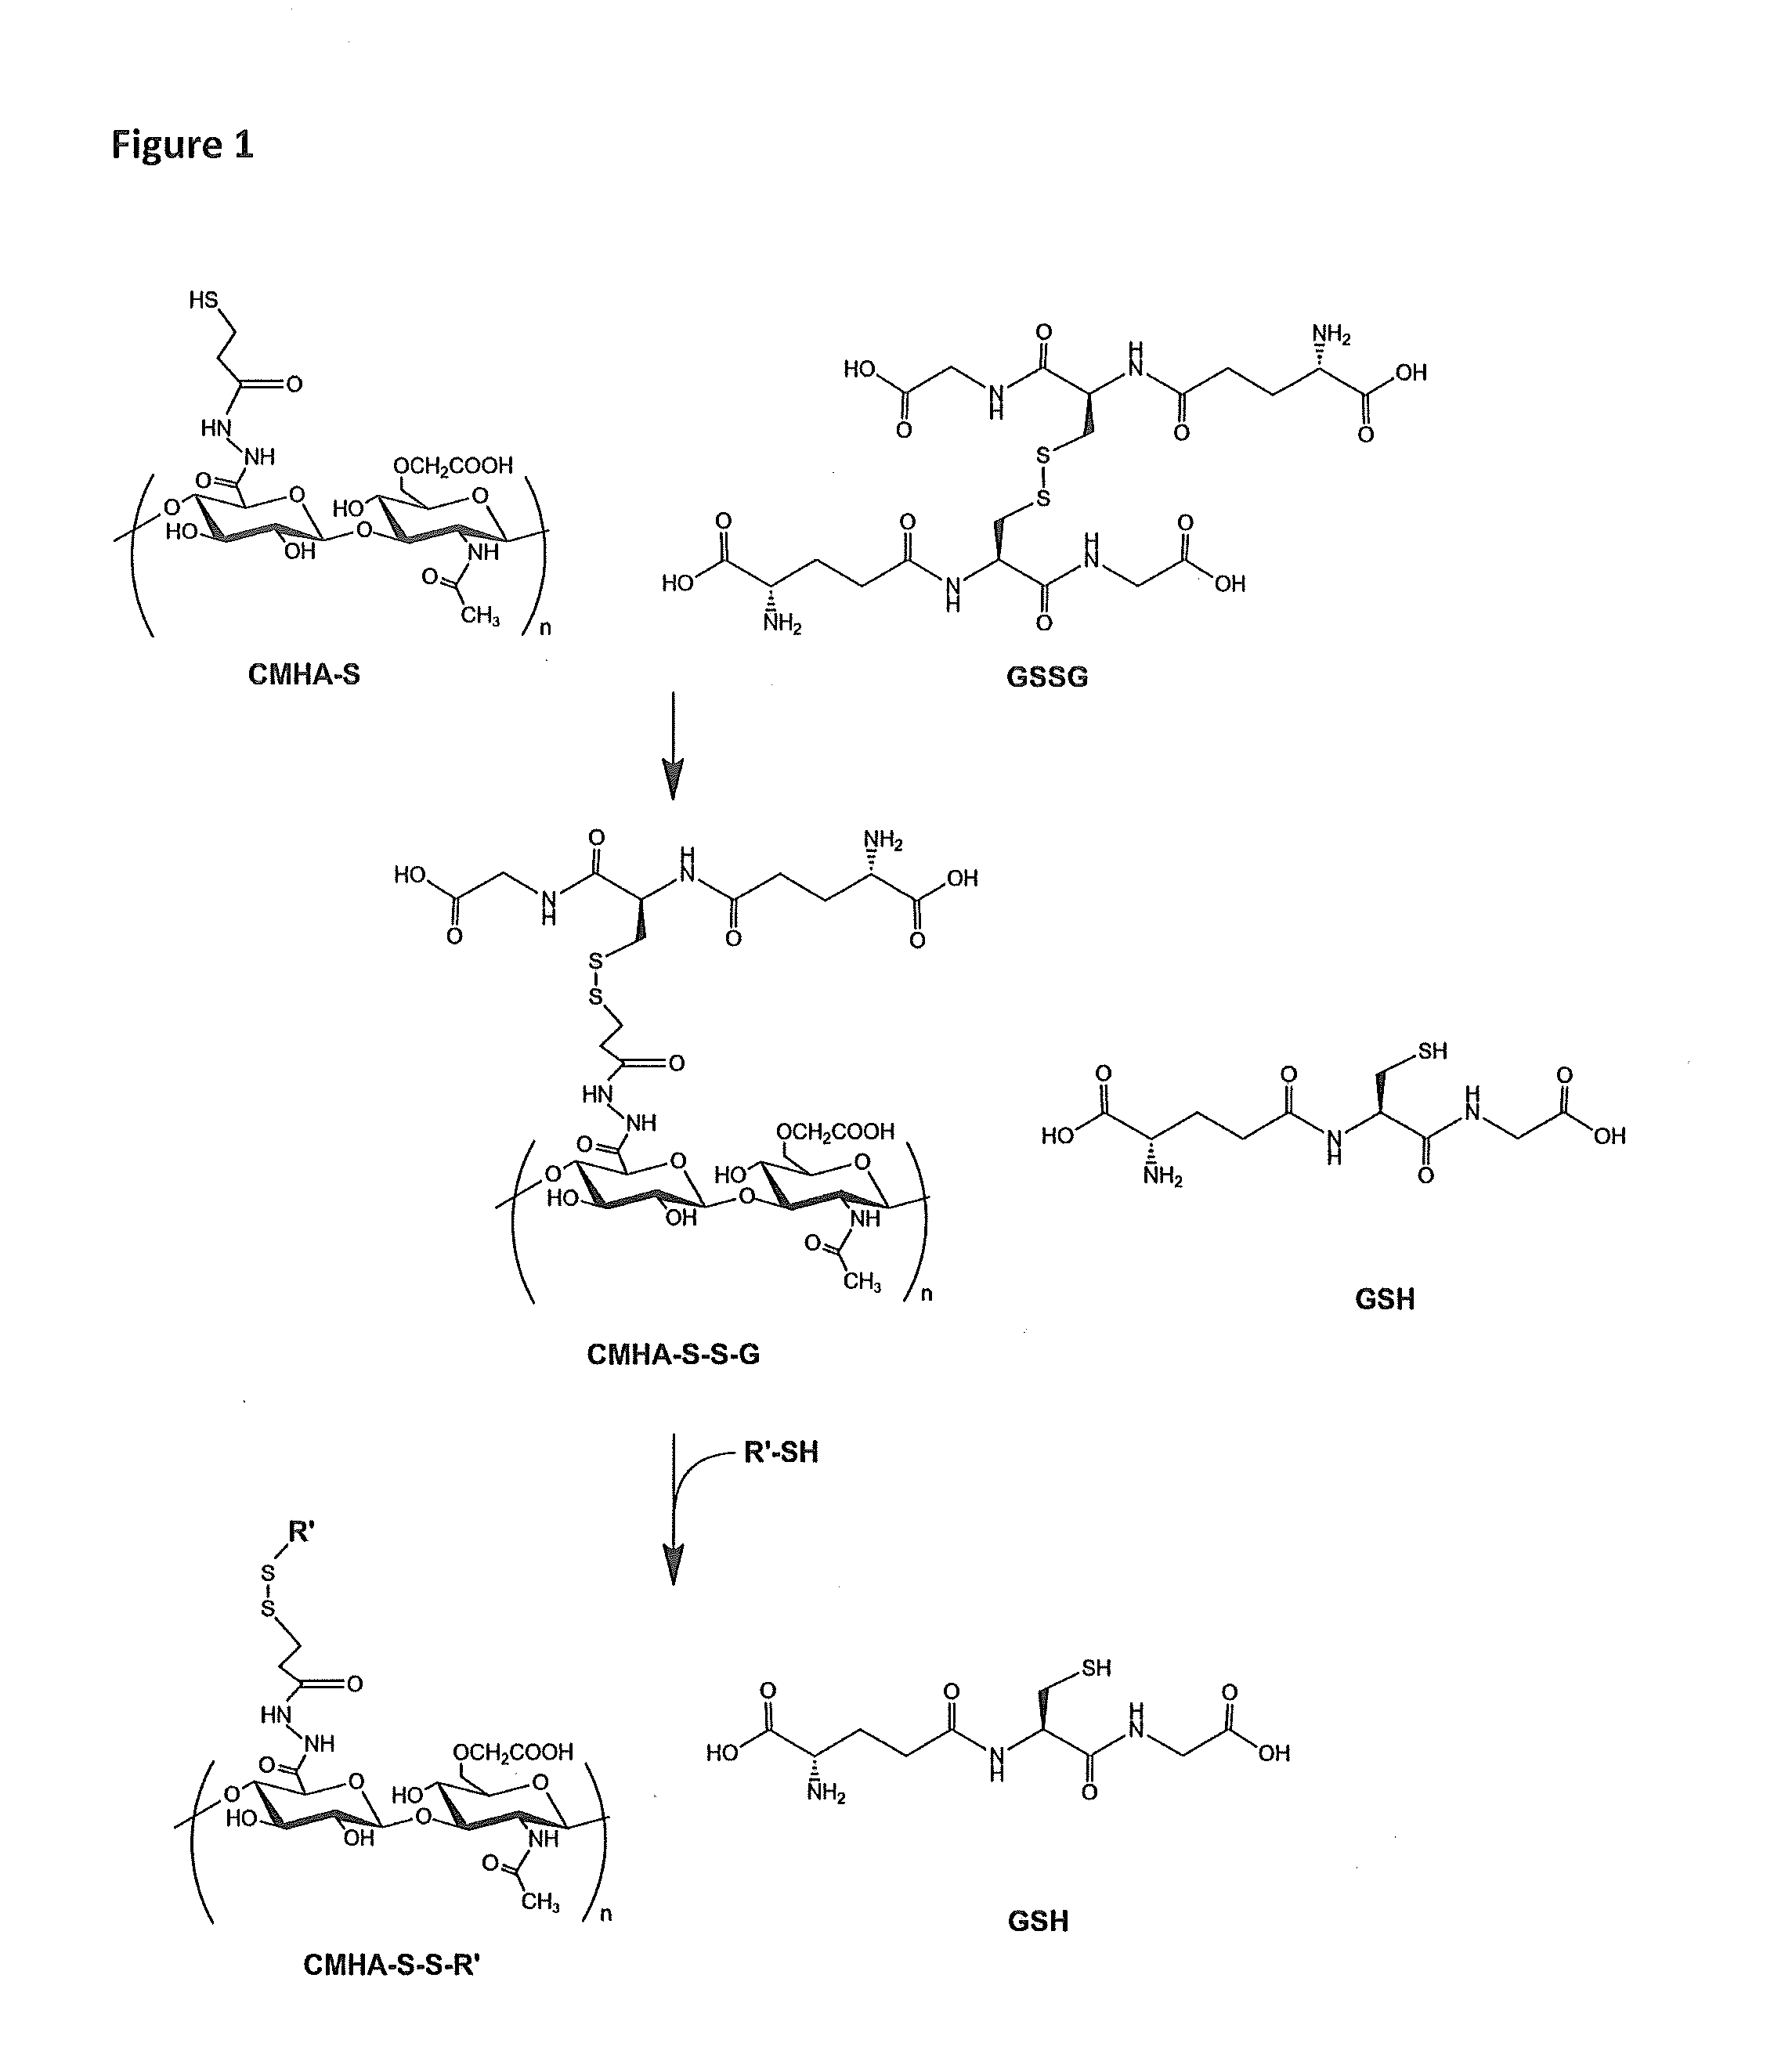 Thiolated hyaluronan-based hydrogels cross-linked using oxidized glutathione